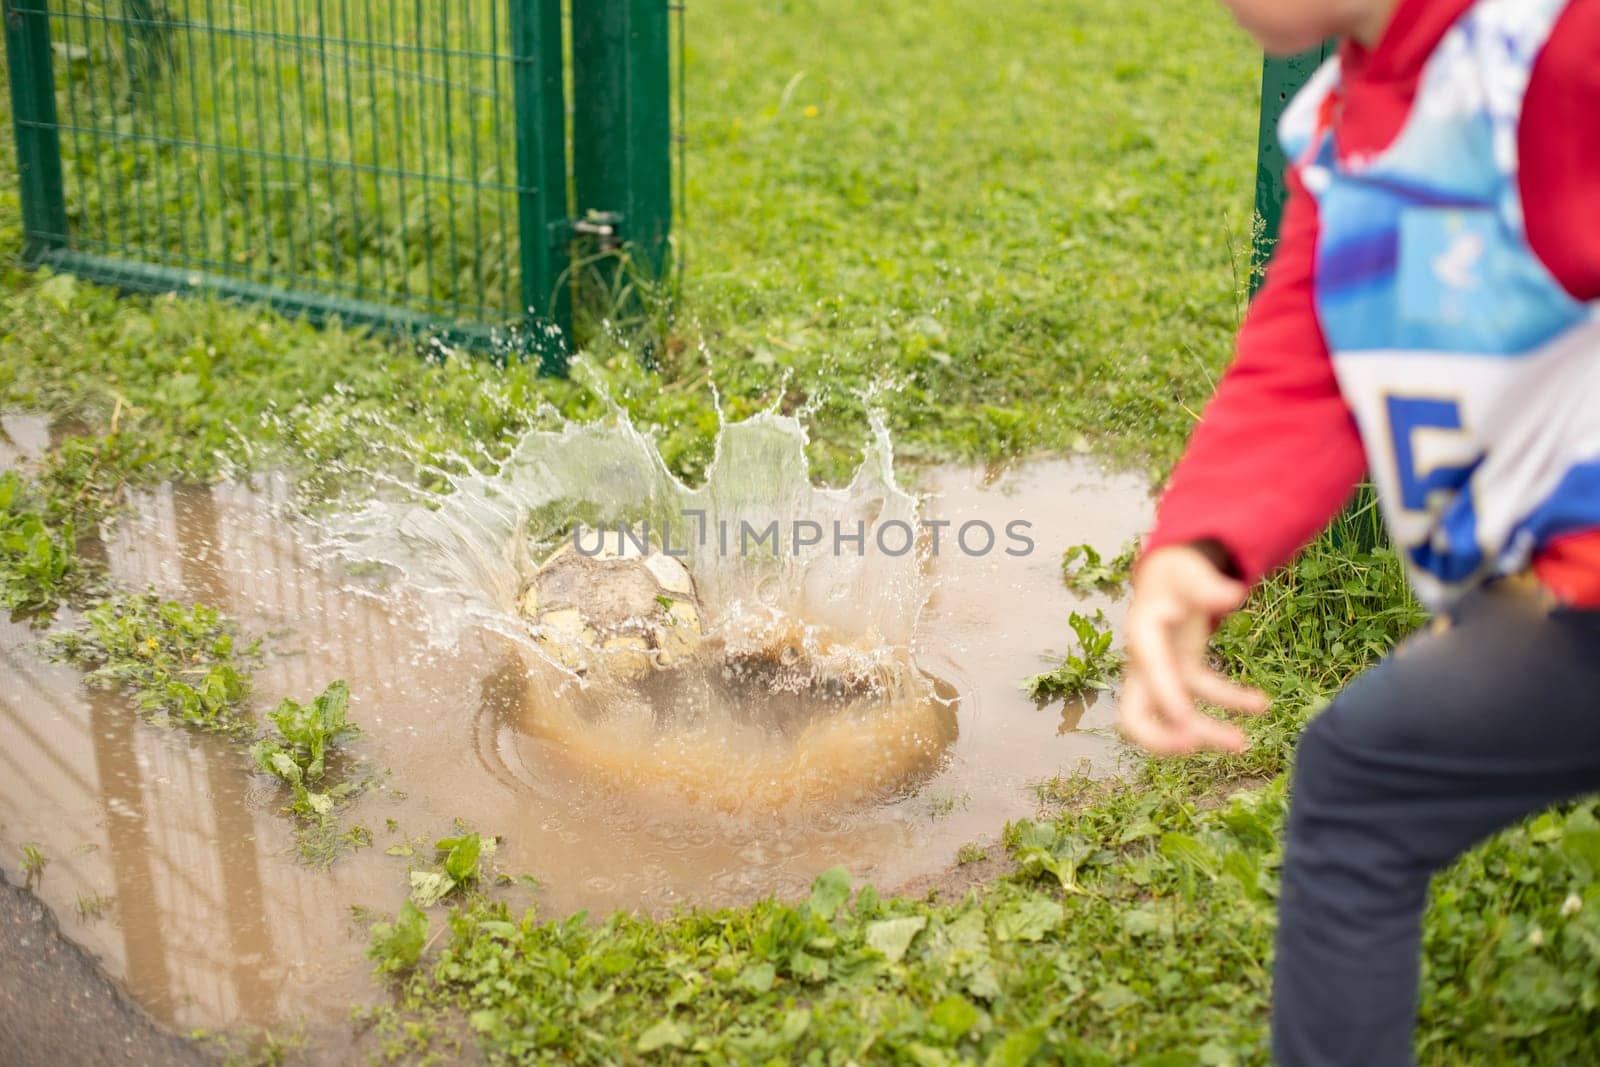 Child threw ball into puddle. Hit water. Splash game. by OlegKopyov